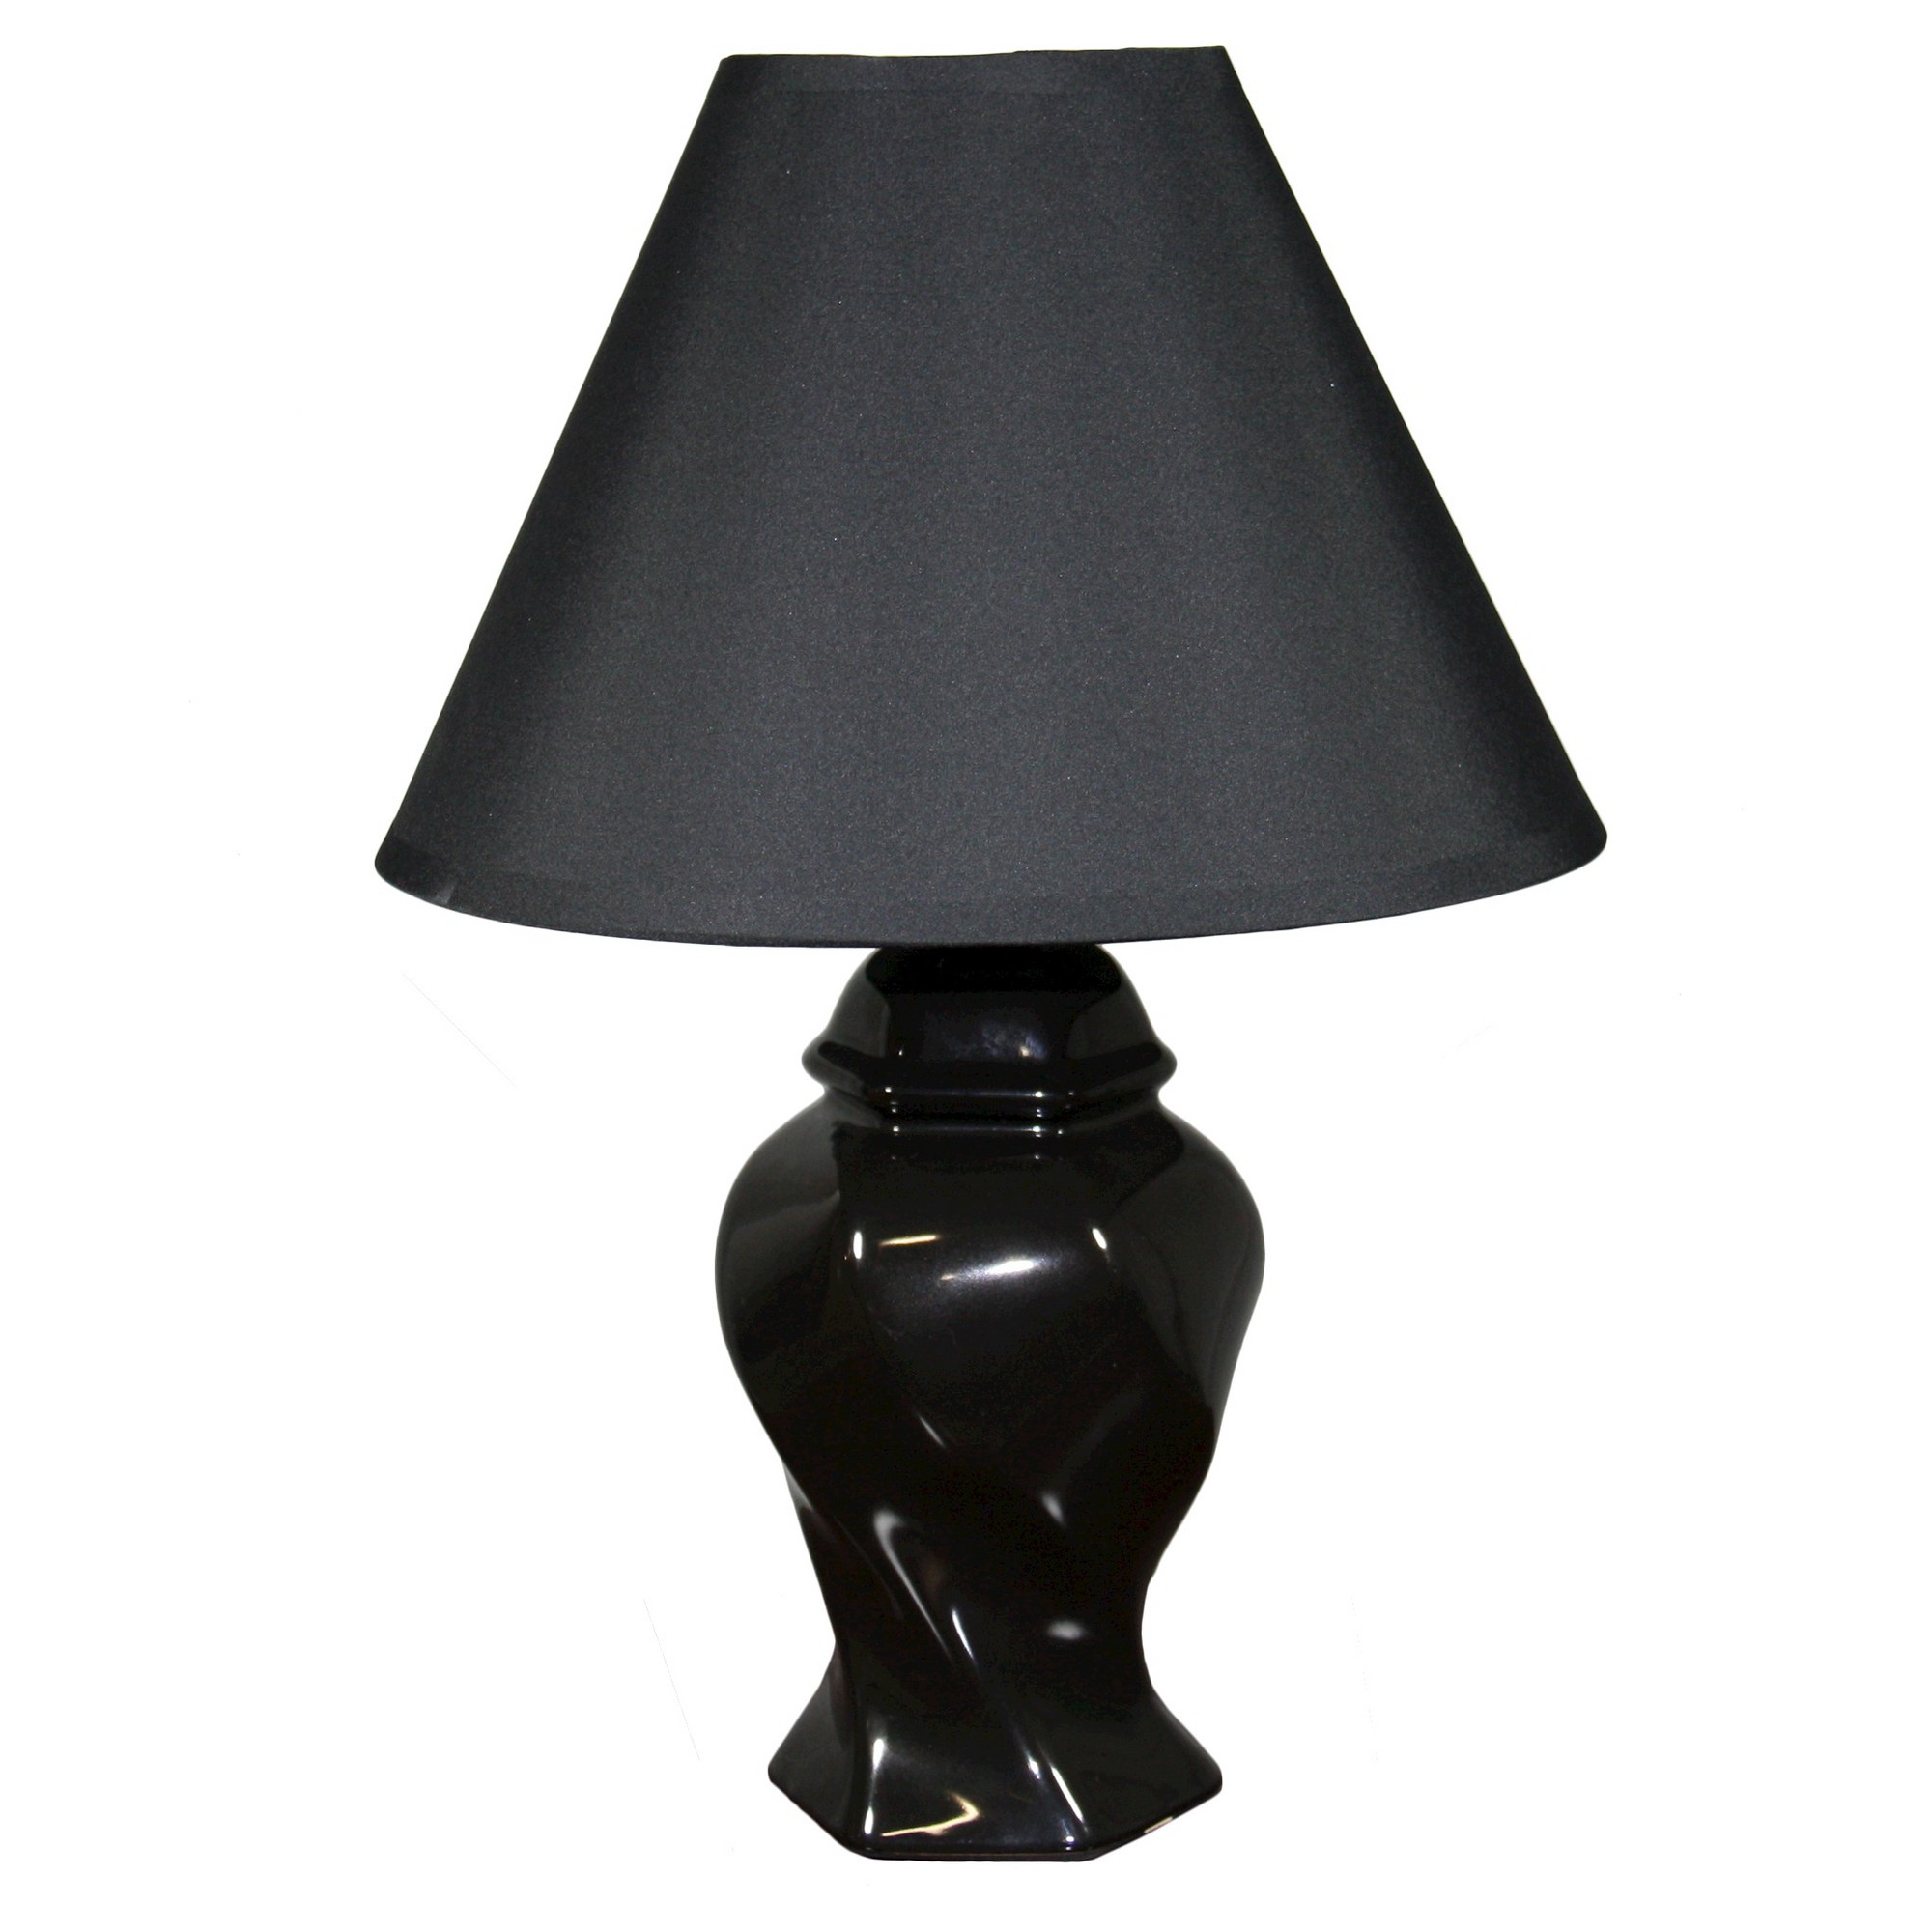 Ceramic Twist Table Lamp - Black (Lamp Only)